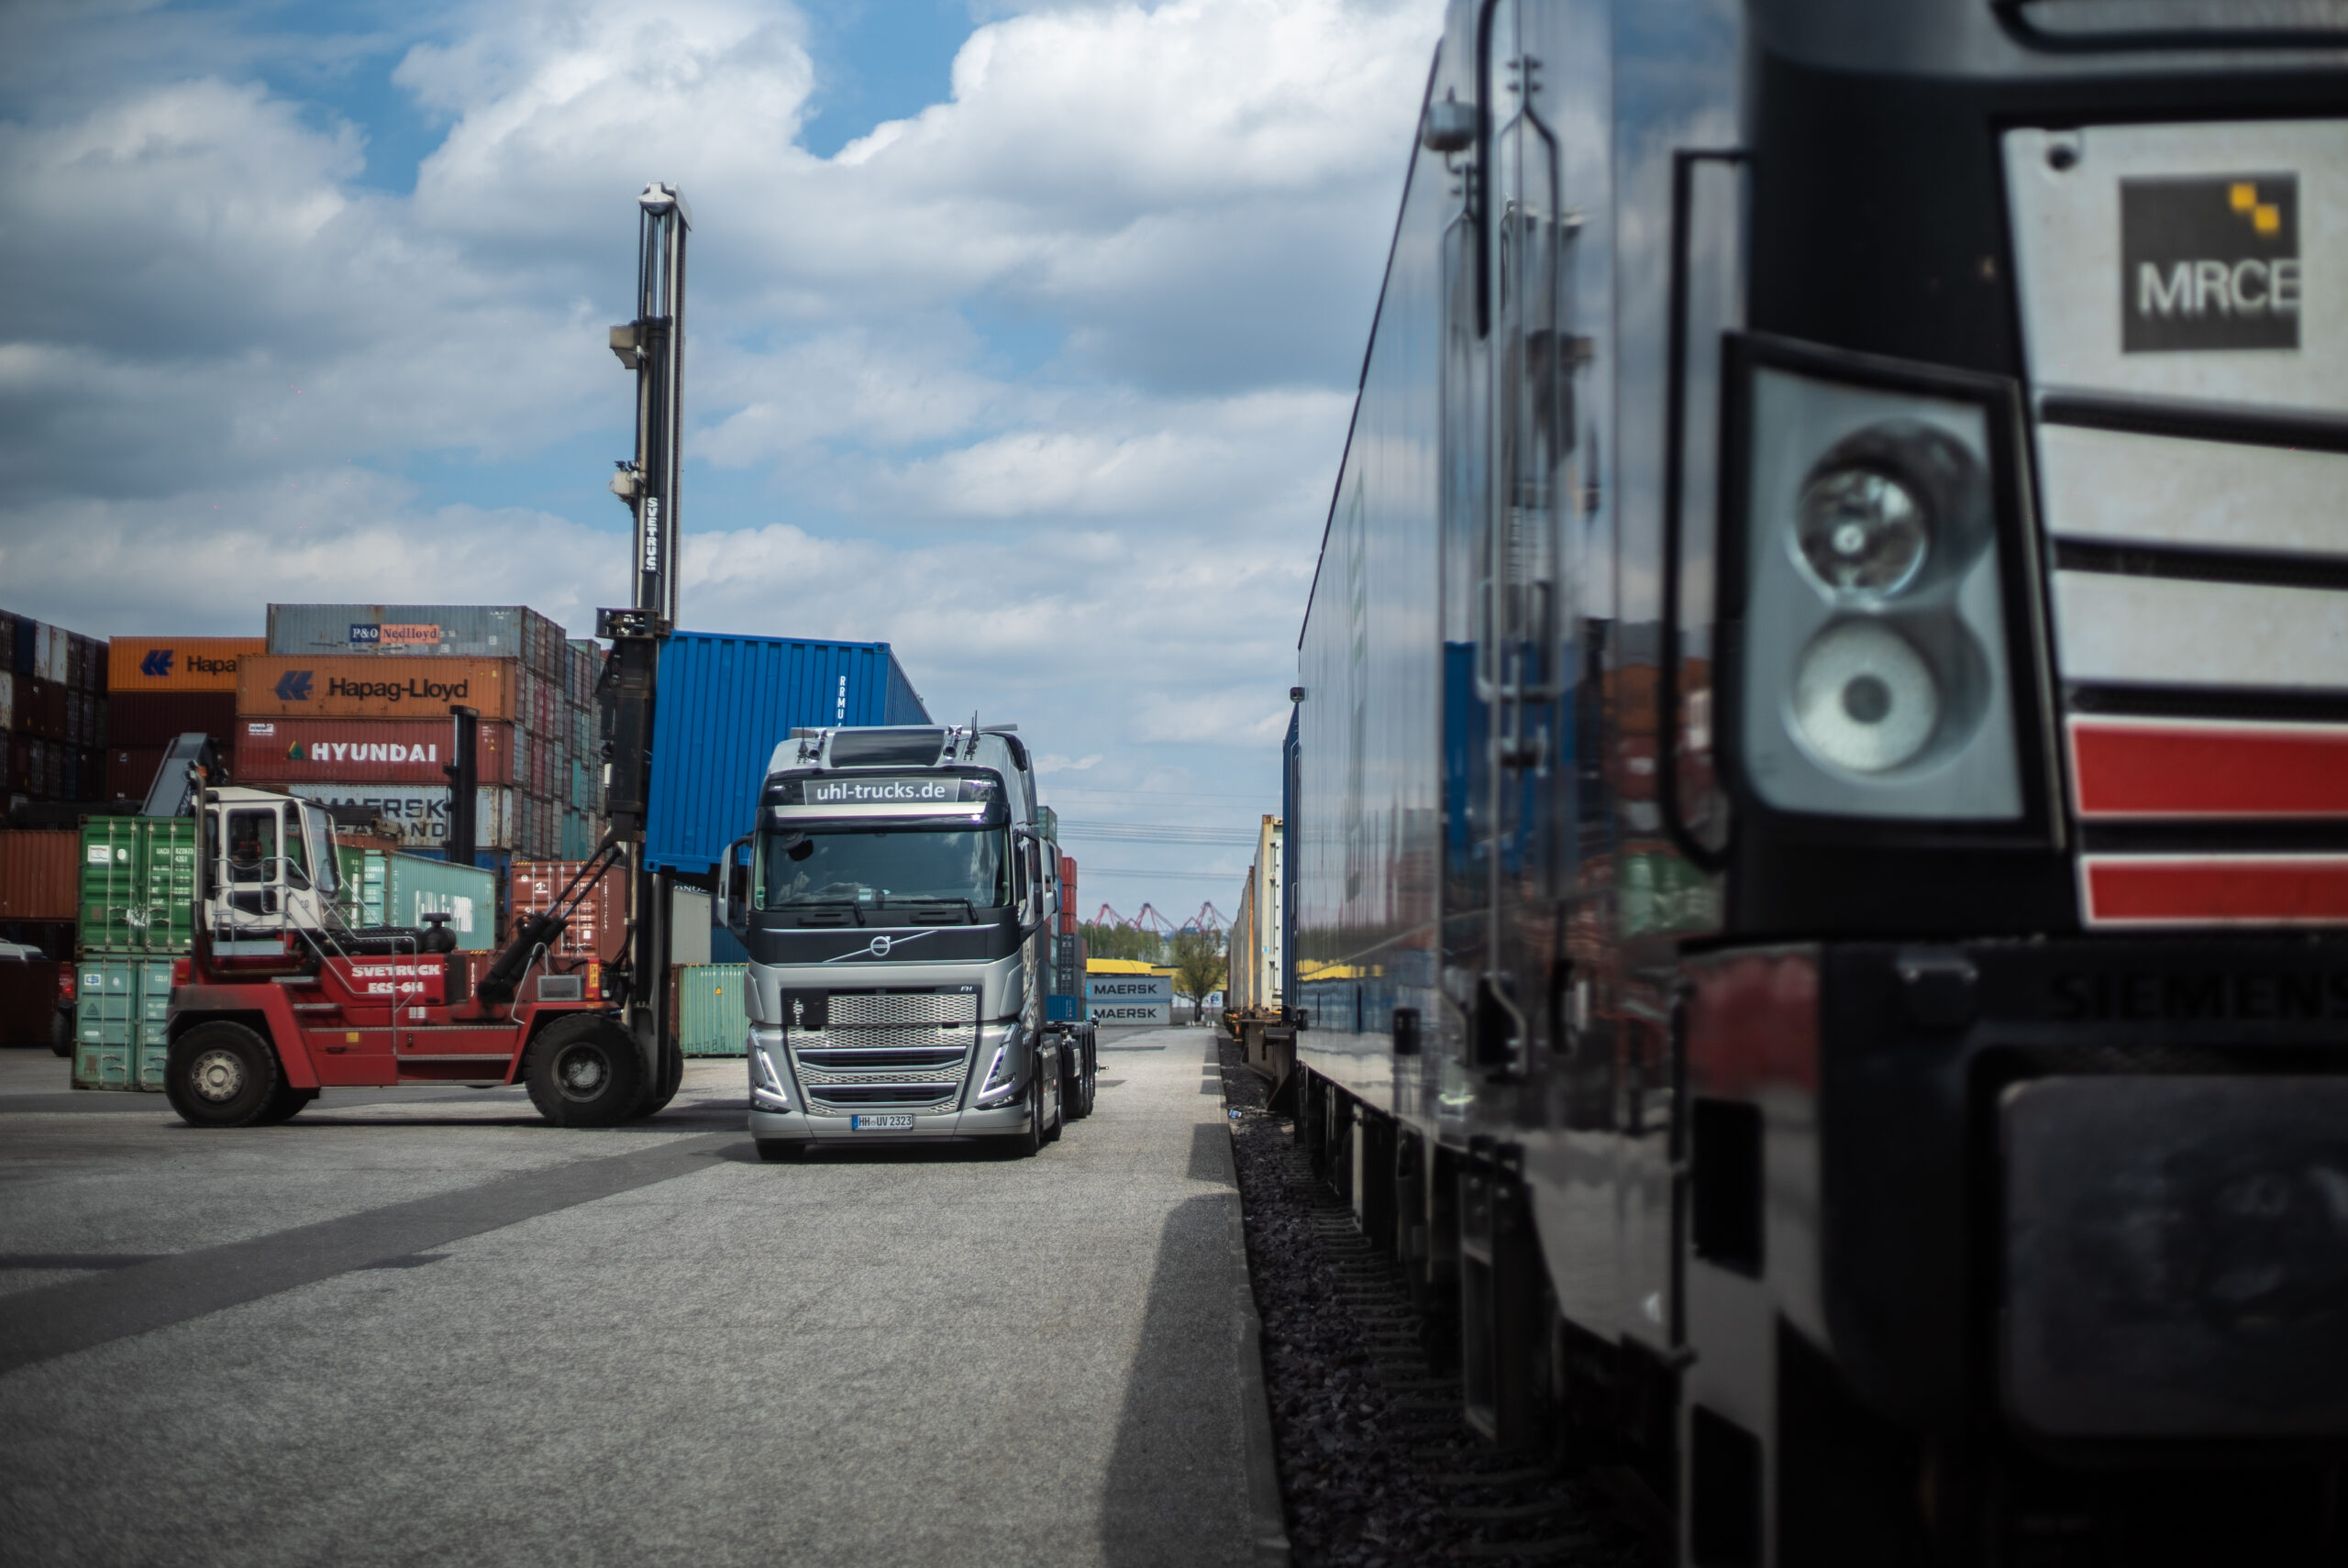 Triff driveMybox auf der transport:logistic 2023!